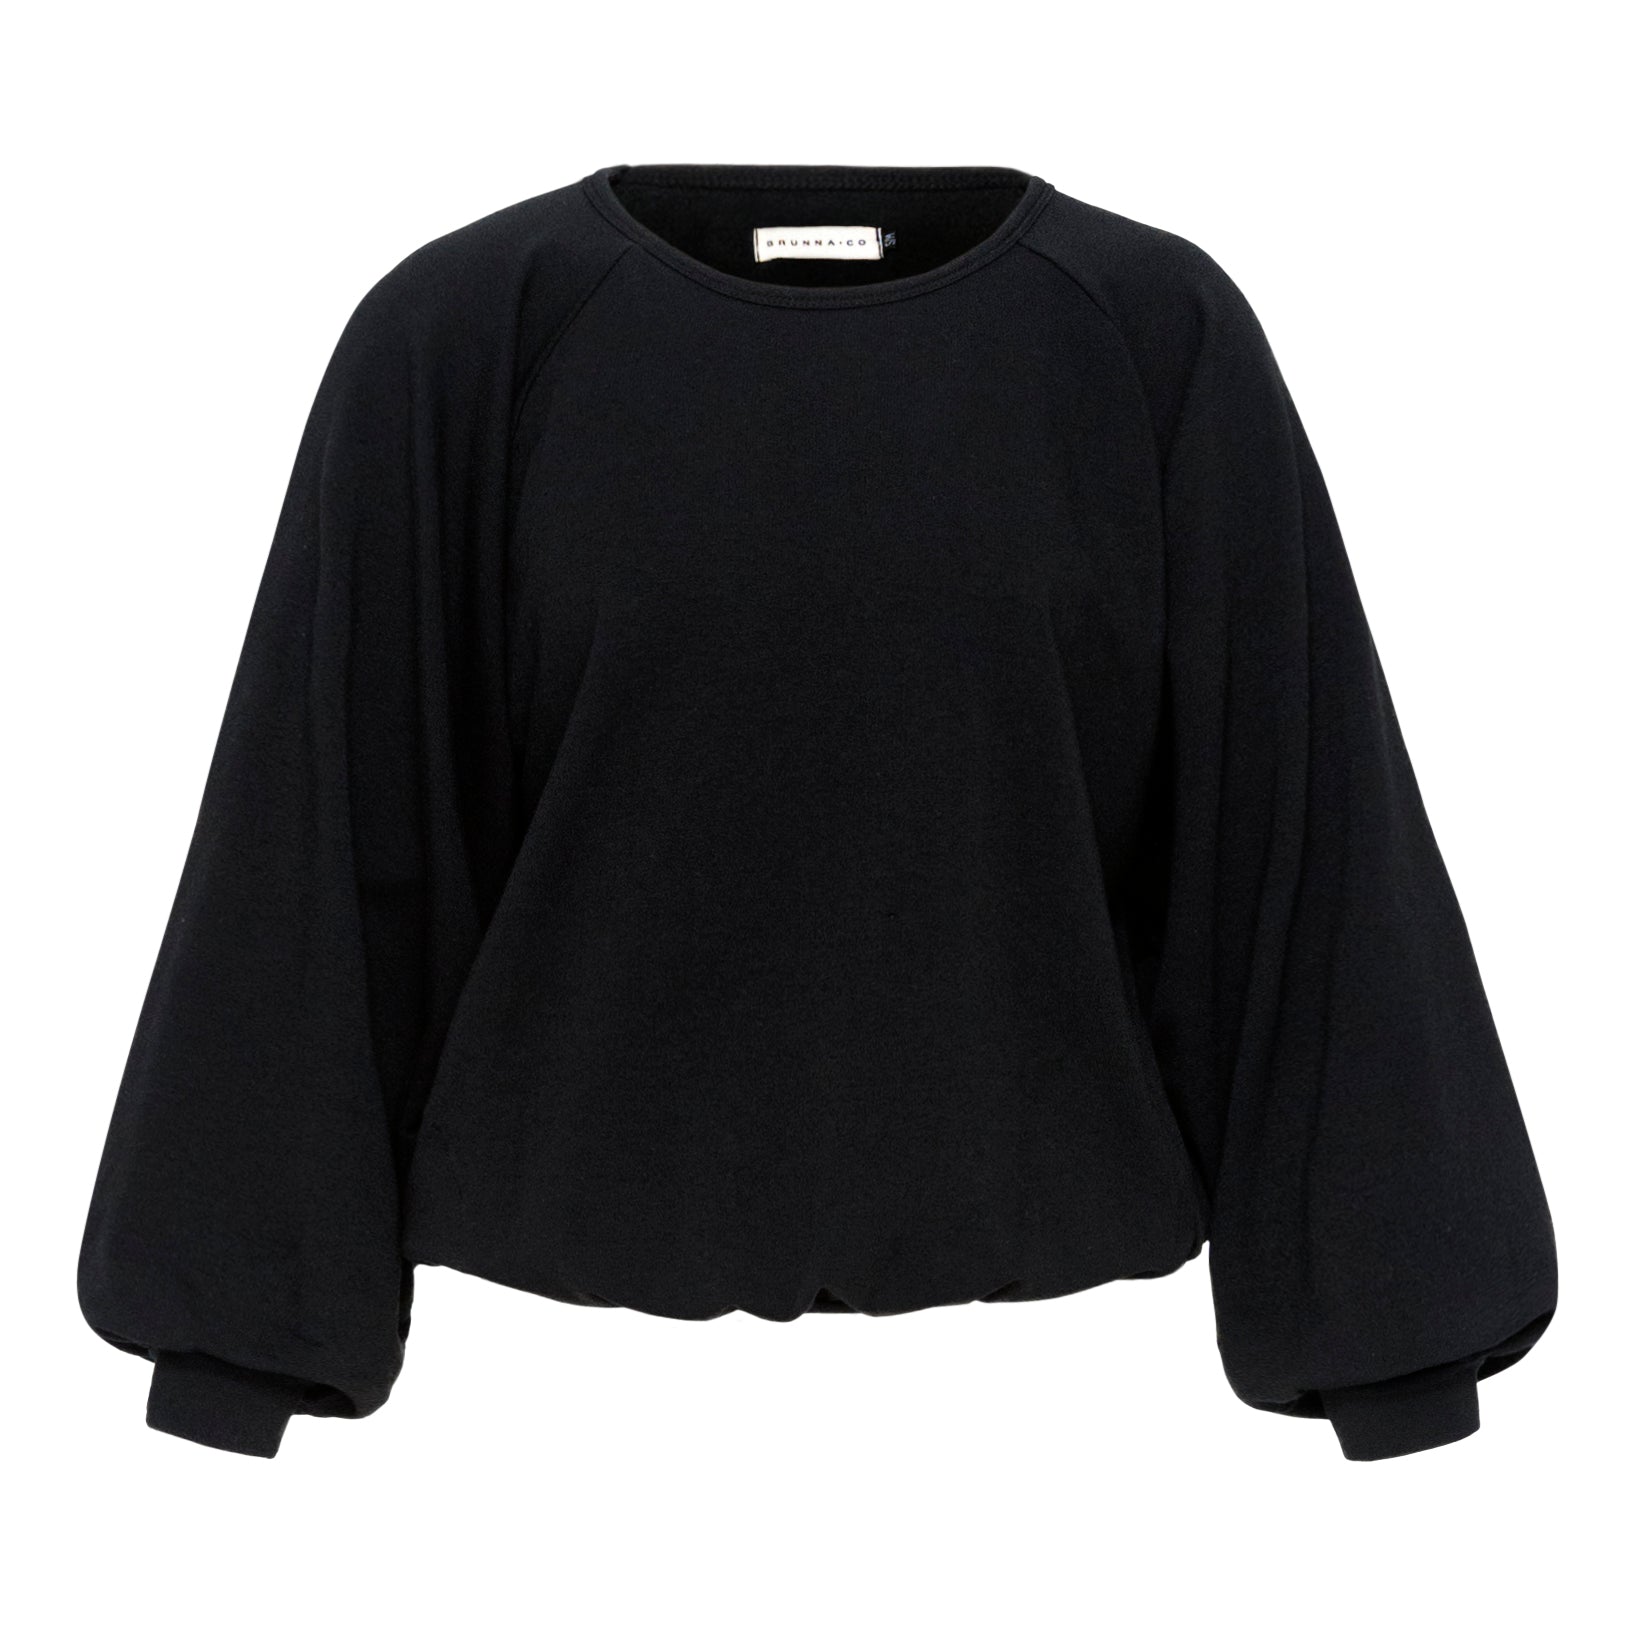 Buy Haley Bamboo Fleece Sweaters, in Black by BrunnaCo